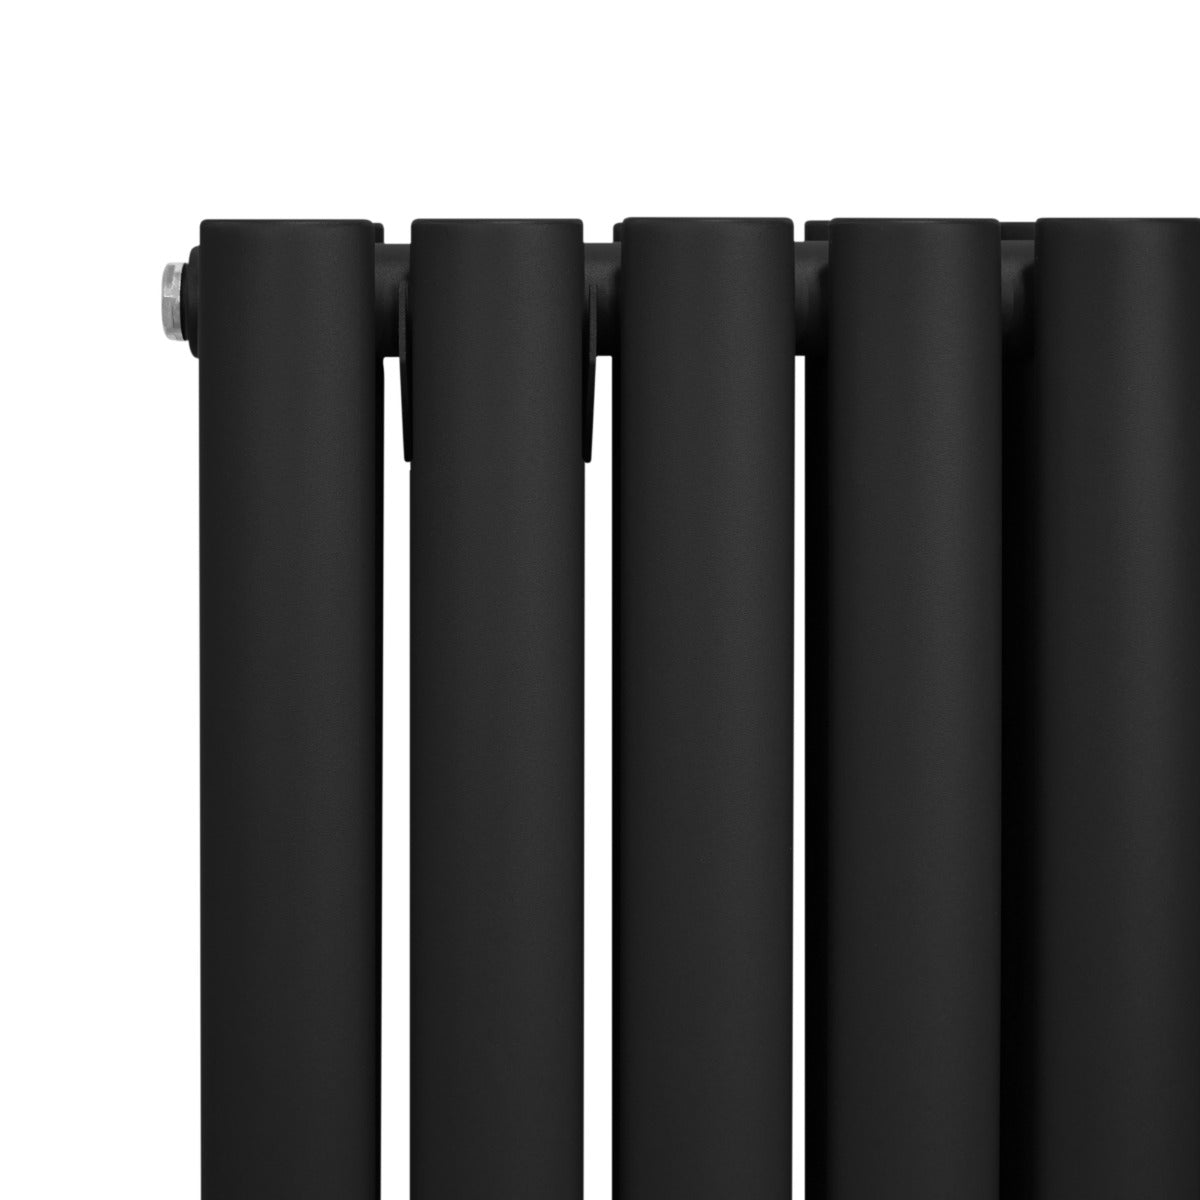 Oval Column Radiator & Valves - 1800mm x 480mm – Black